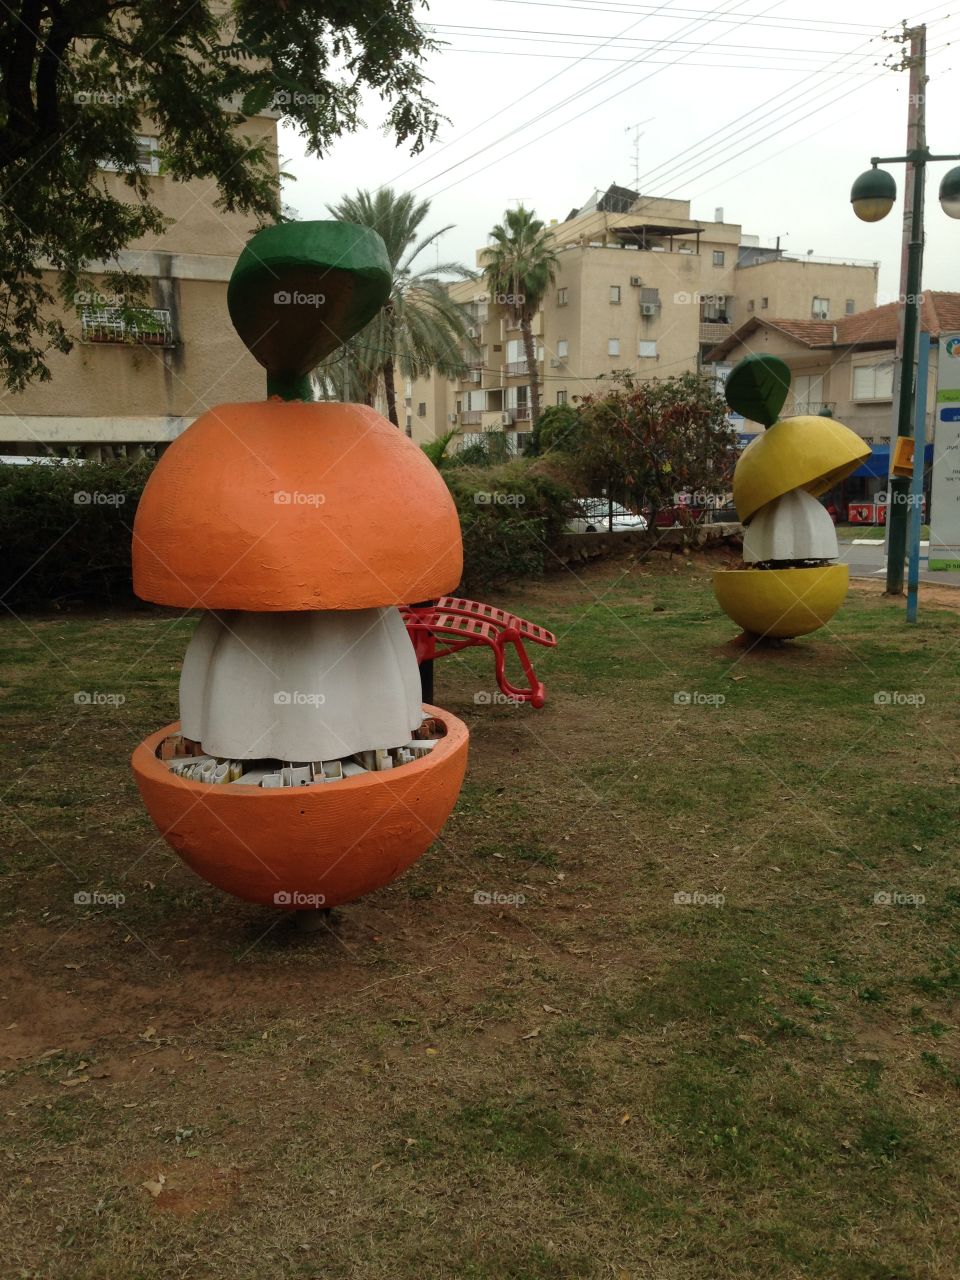 A sculpture of a fruit juicer